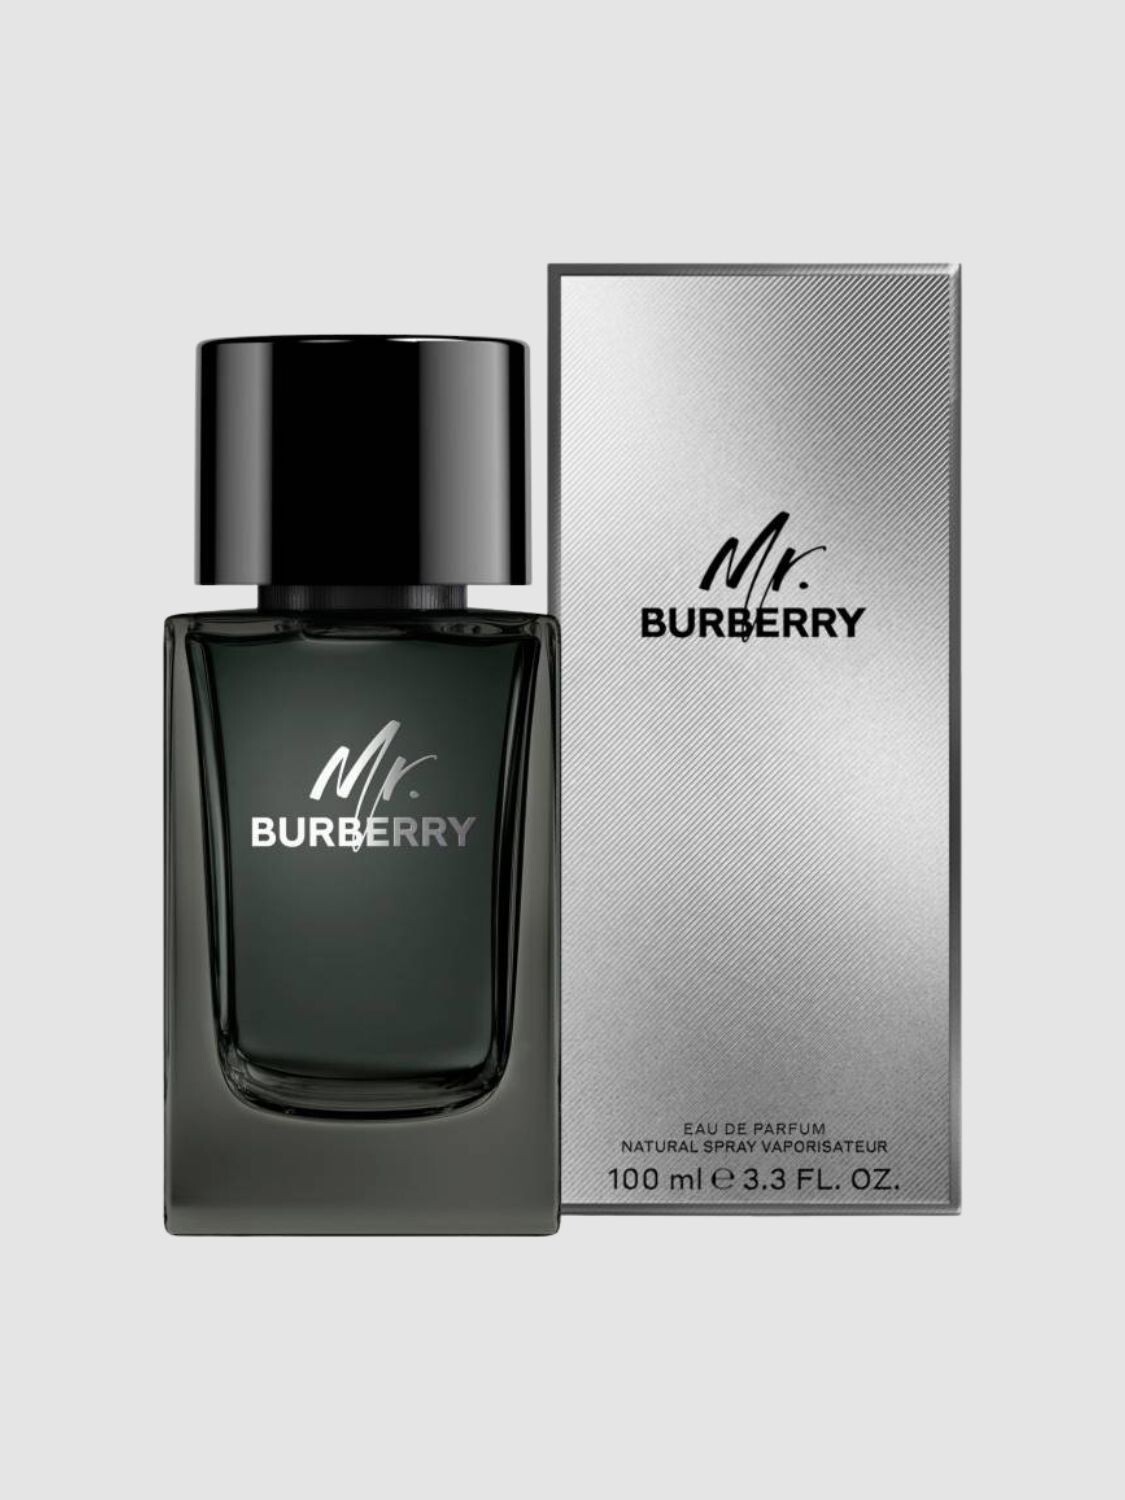 Perfume Burberry Mr. Burberry EDP 50ml 0